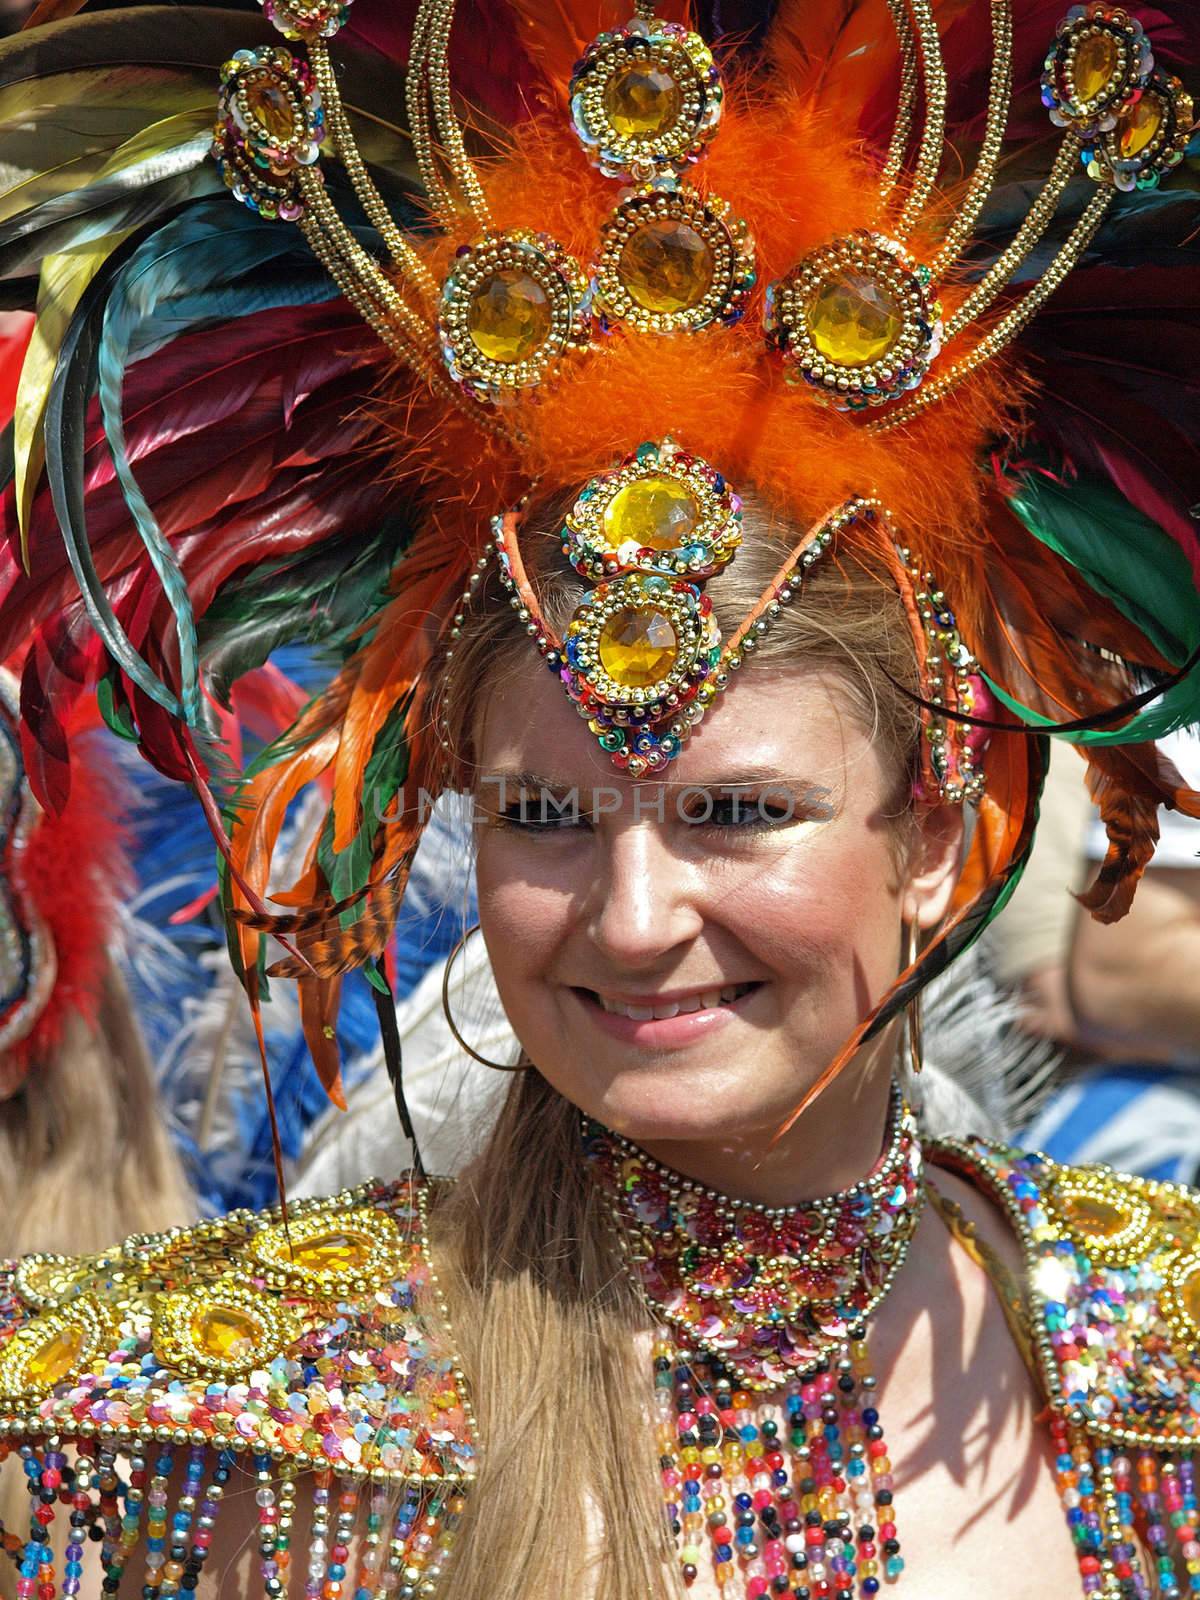 Copenhagen Carnival participant by Ric510